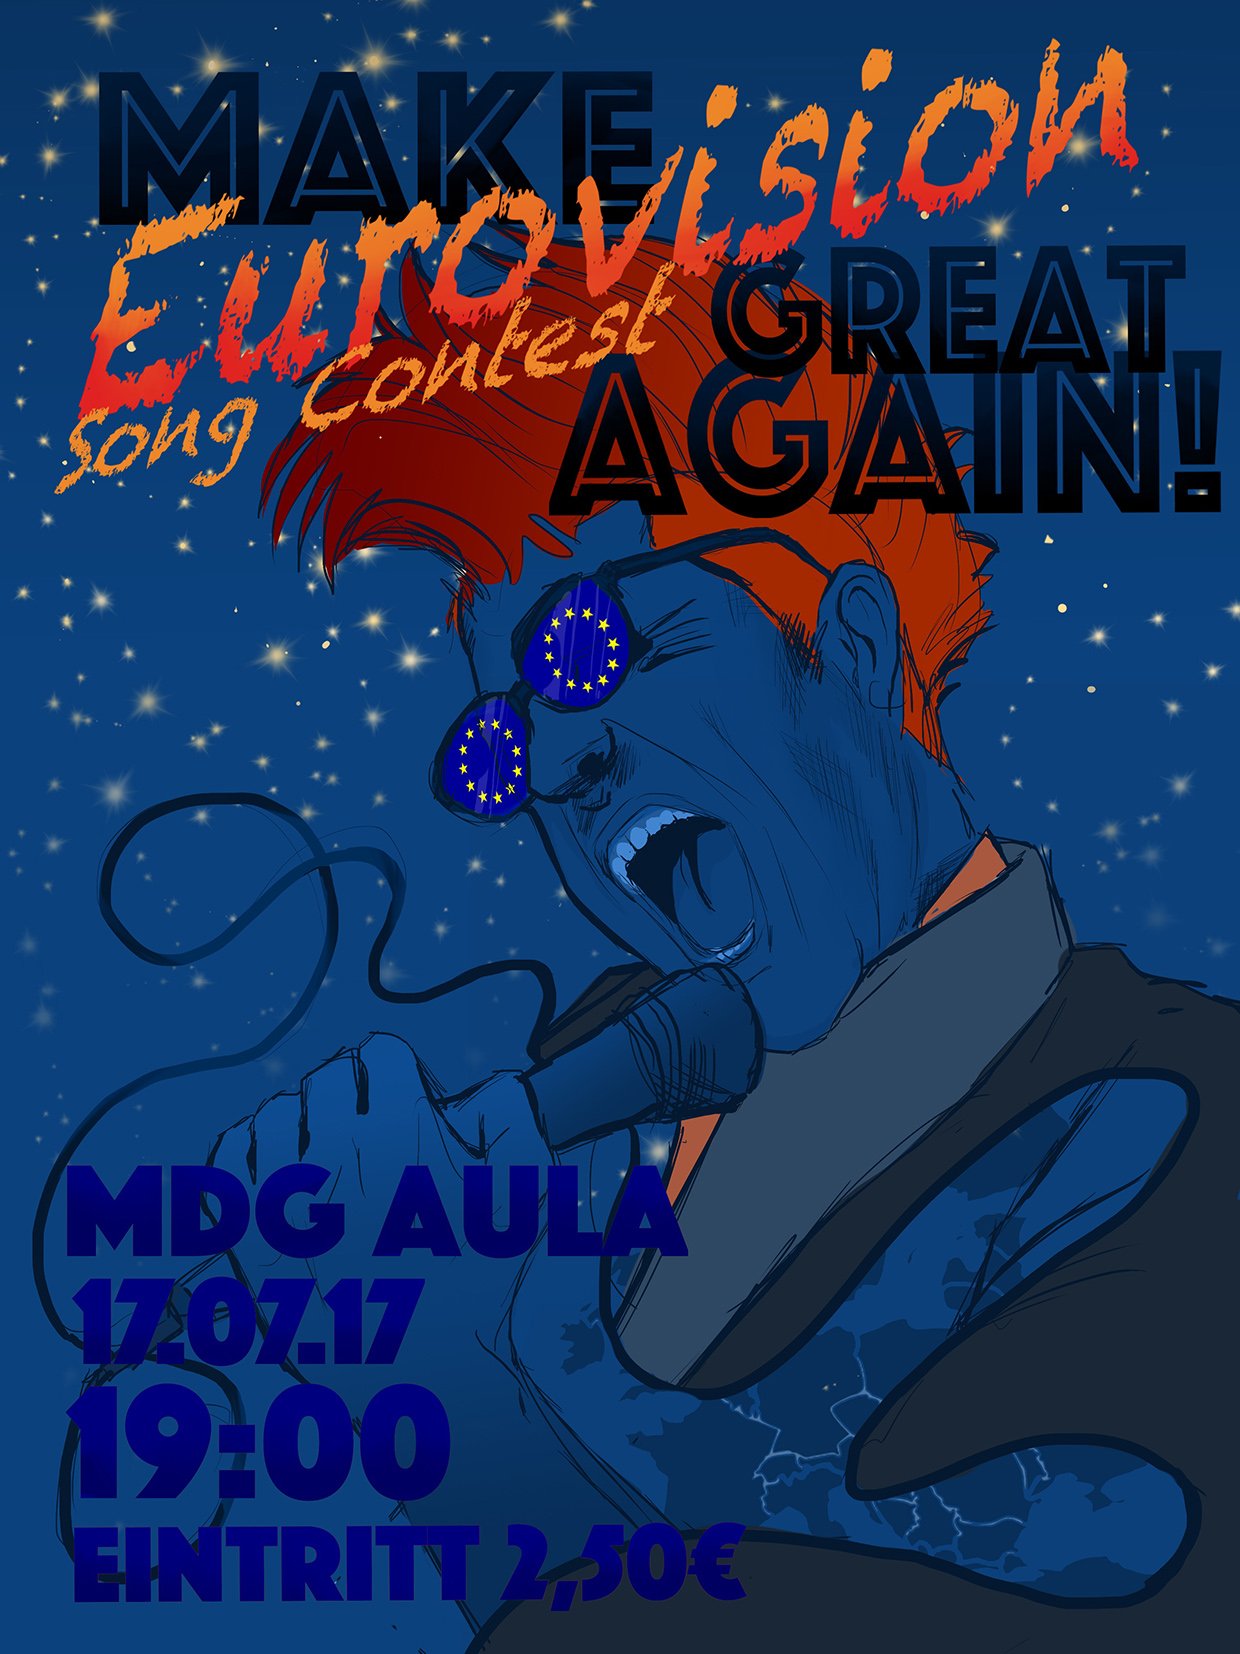 Make Eurovision-Songcontest great again!“ – Noerfahrt 2017